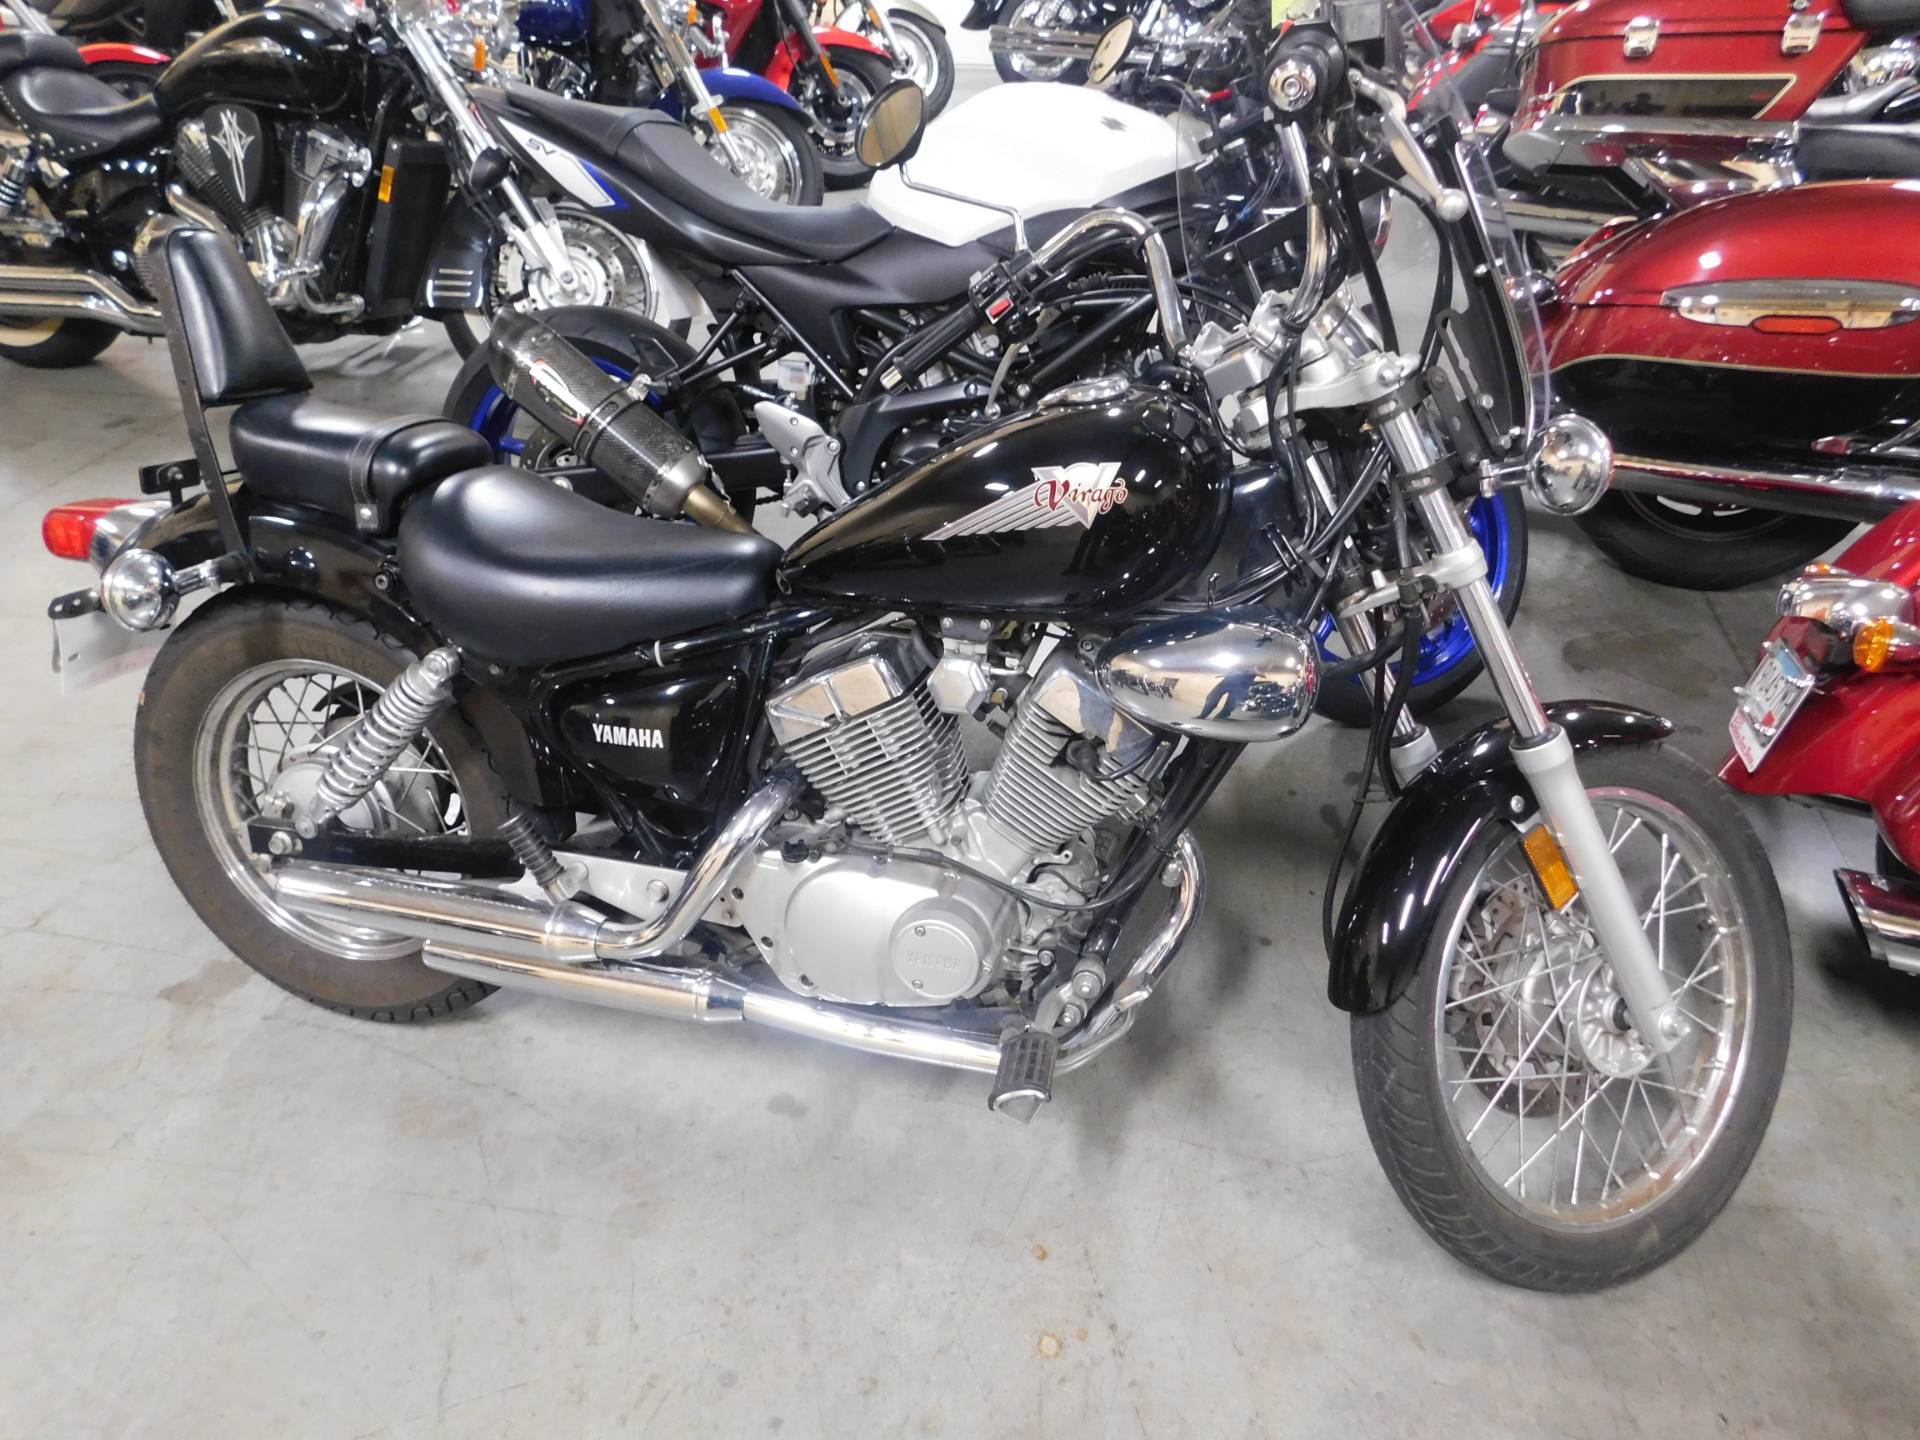 Used 2005 Yamaha Virago 250 Motorcycles In Sauk Rapids Mn Stock Number N A